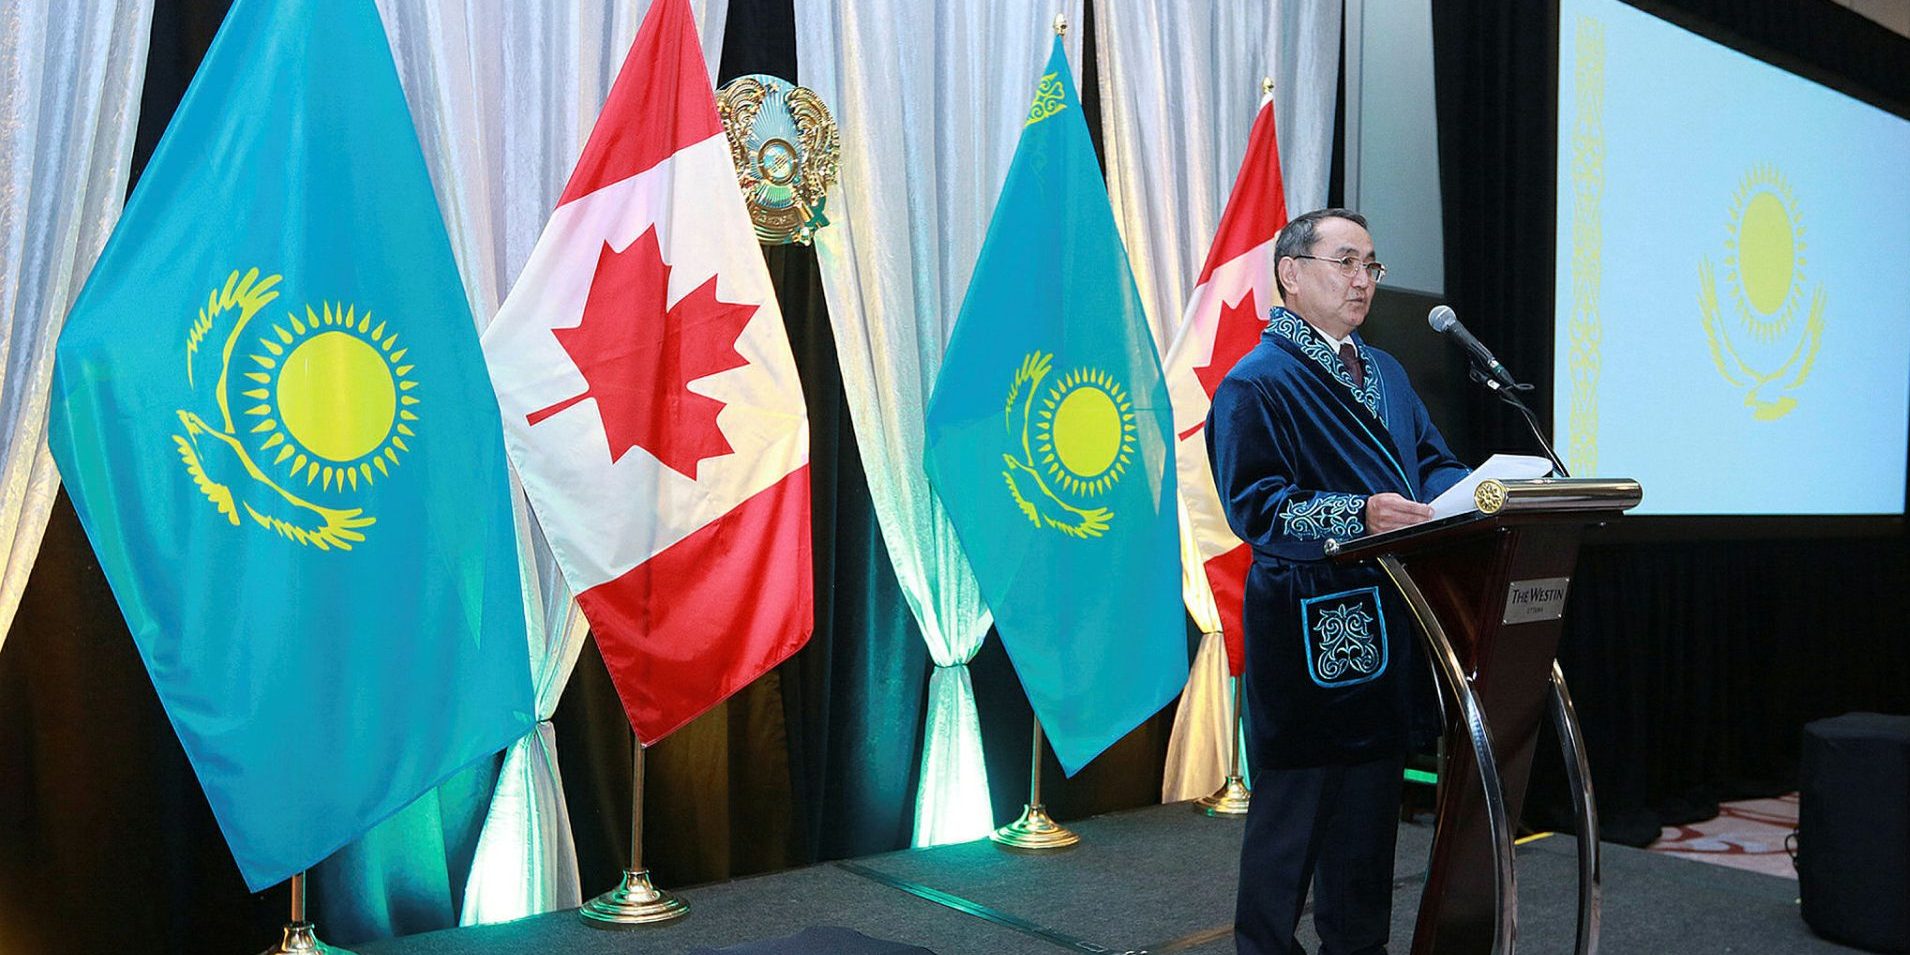 Kazakhstan Ambassador Akylbek
Kamaldinov speaks at a national day reception on Nov. 9,
2022, at The Westin Hotel. The Hill Times photograph by Sam Garcia